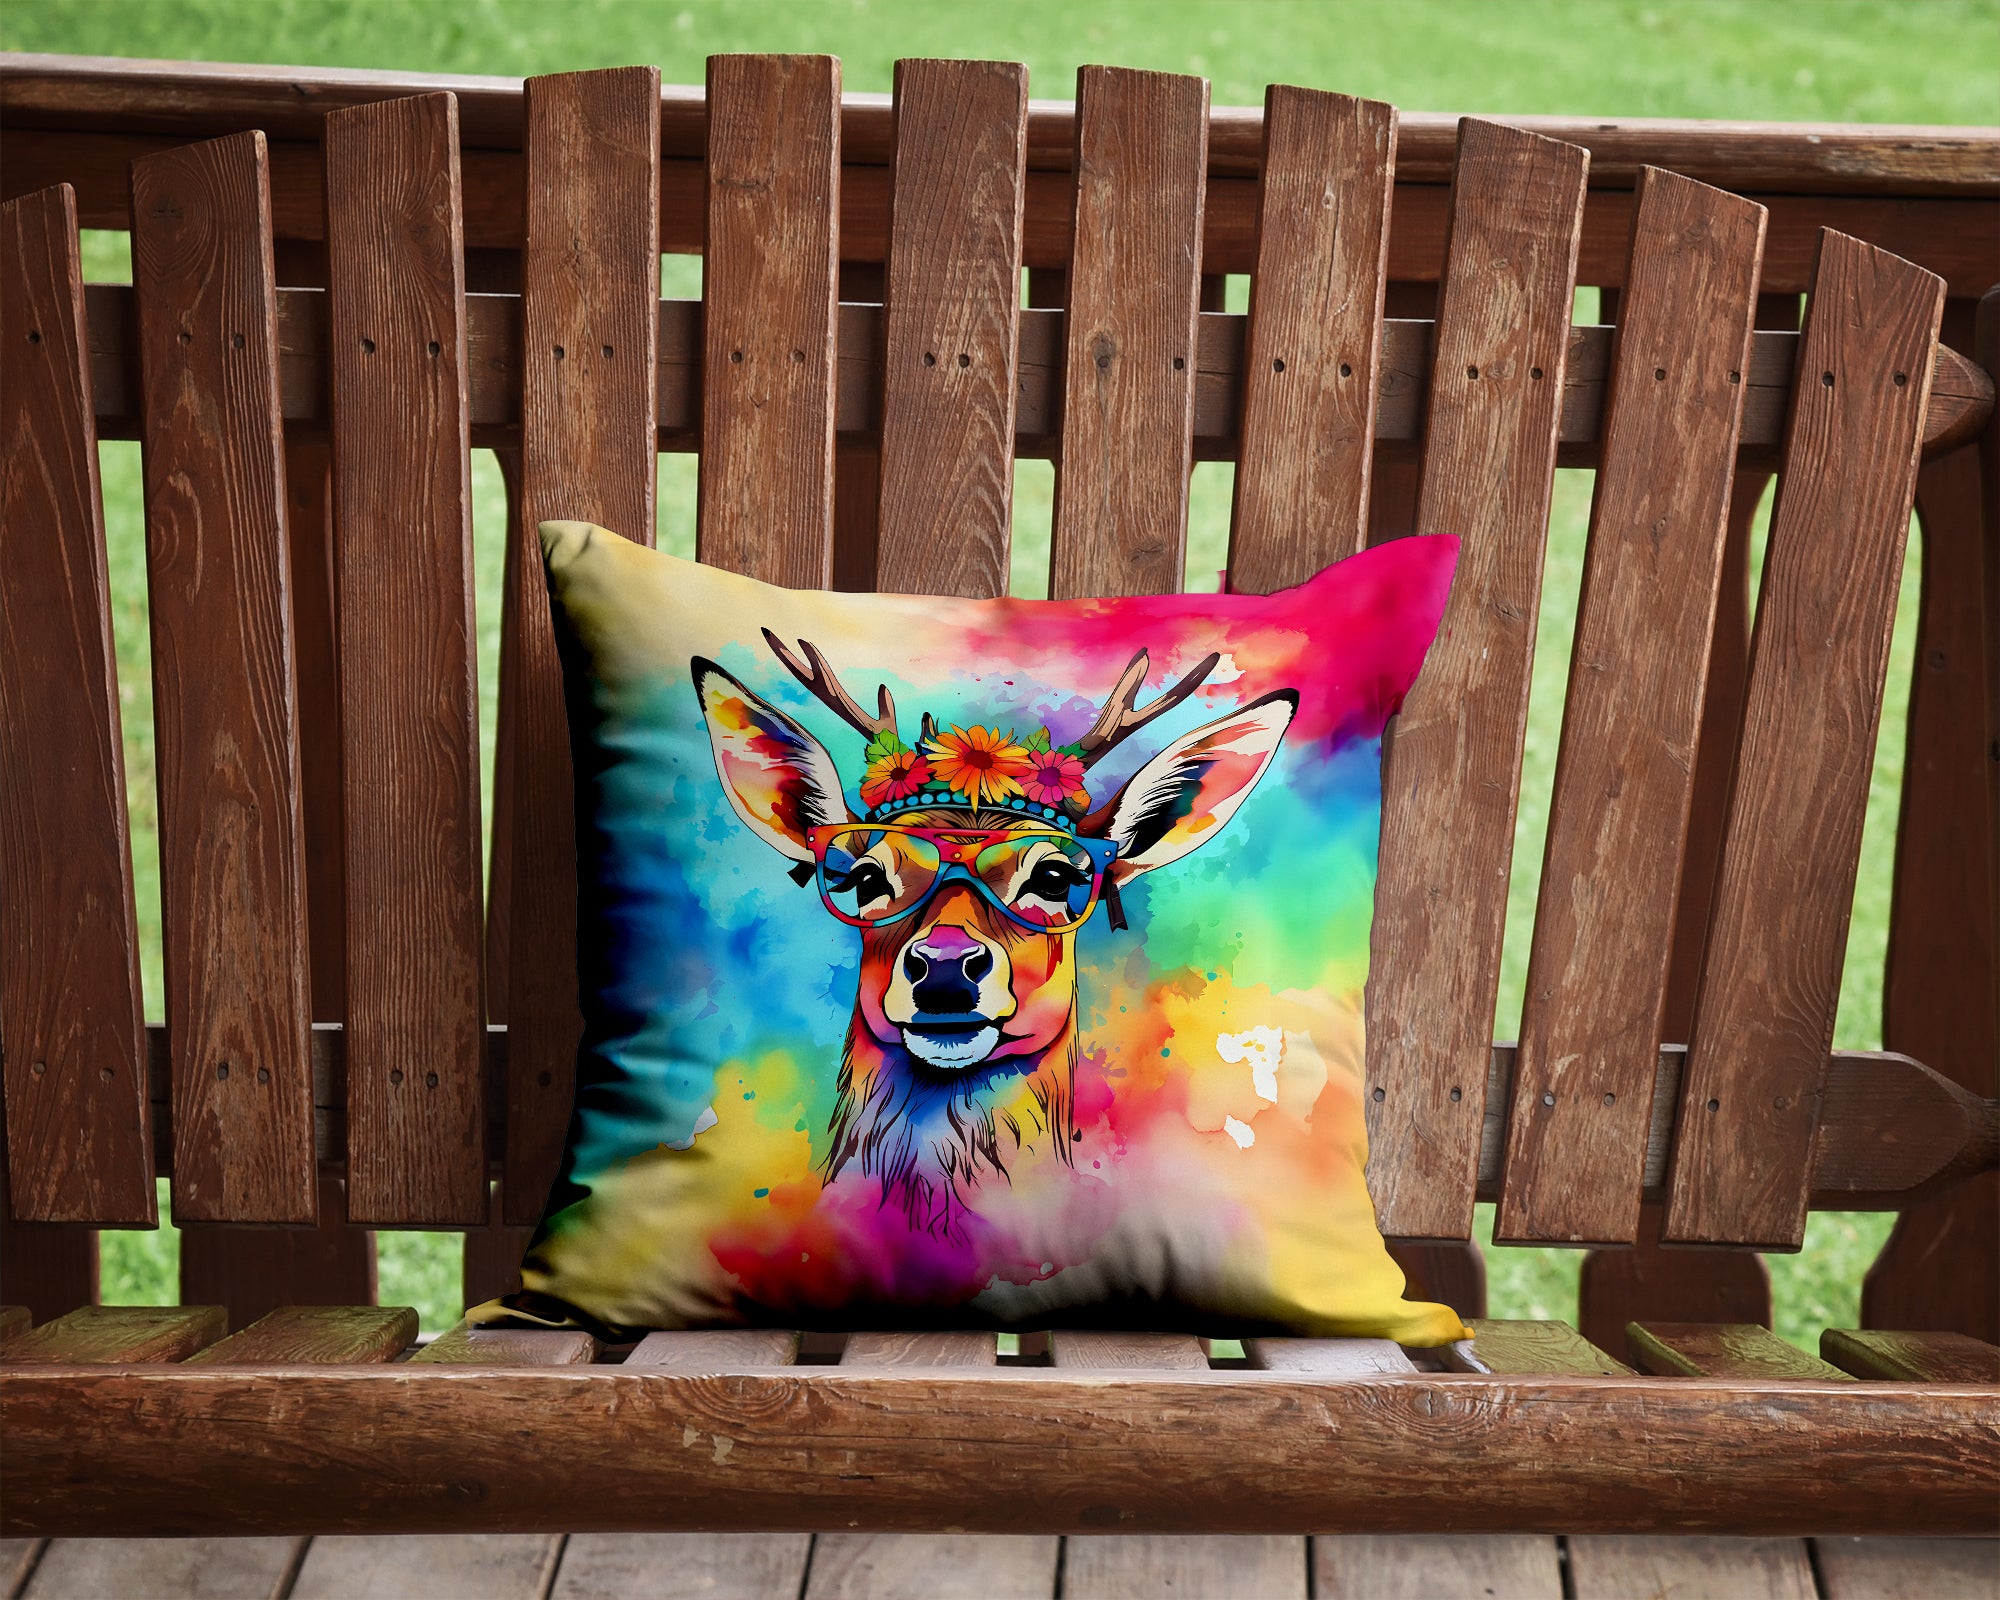 Buy this Hippie Animal Deer Throw Pillow